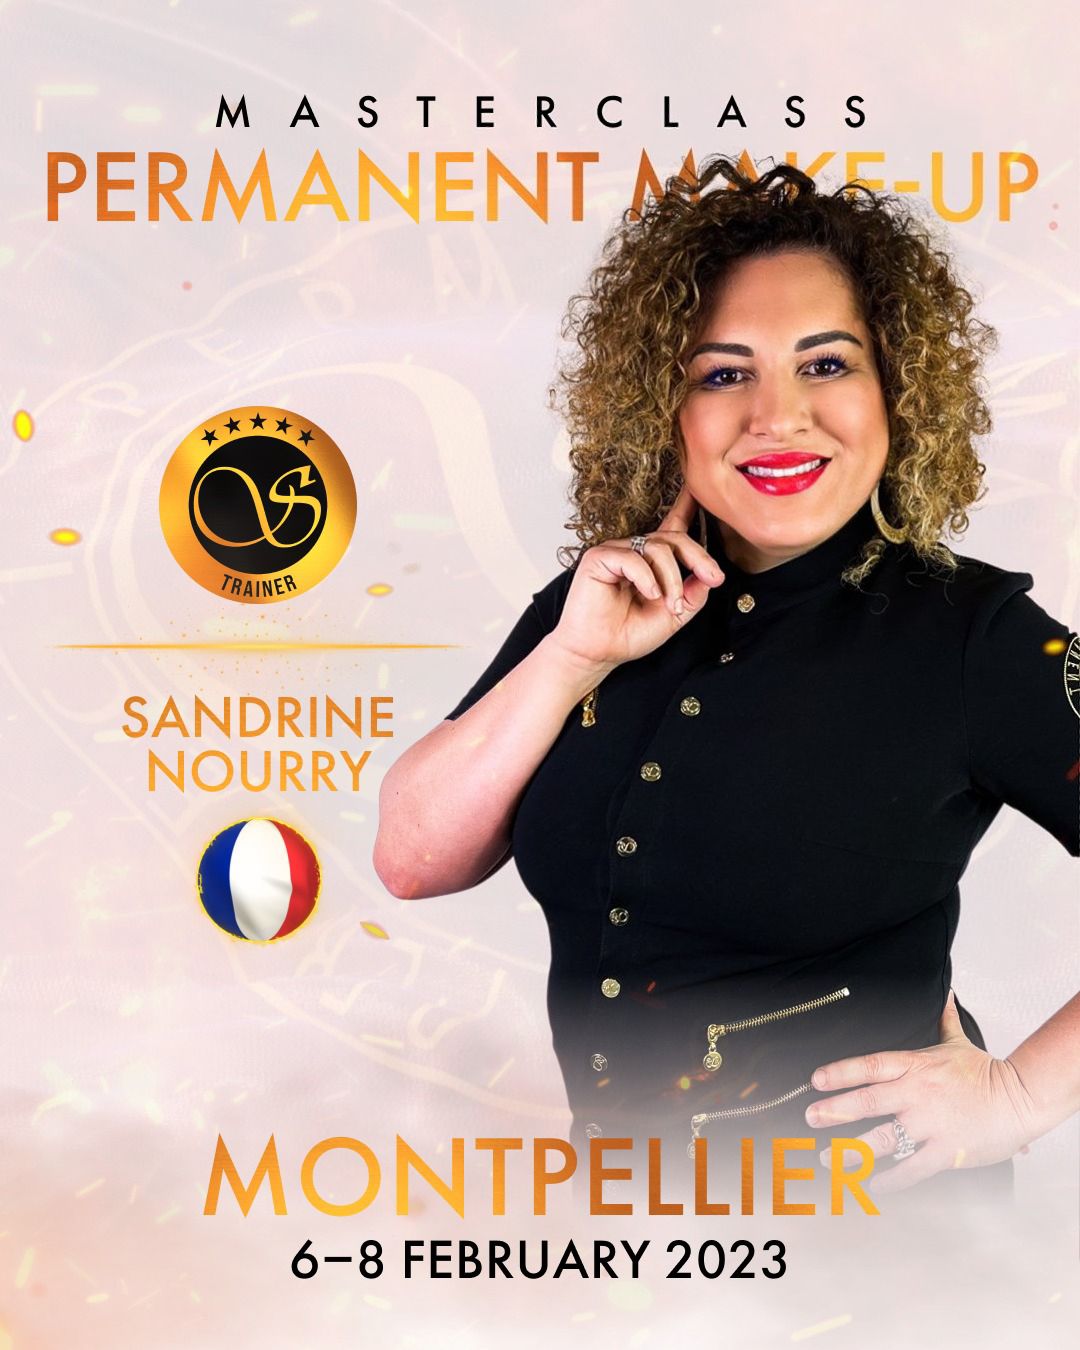 Formation Masterclass Maquillage permanent à Montpellier février 2023 - Sandrine Nourry Sviatoacademy Trainer